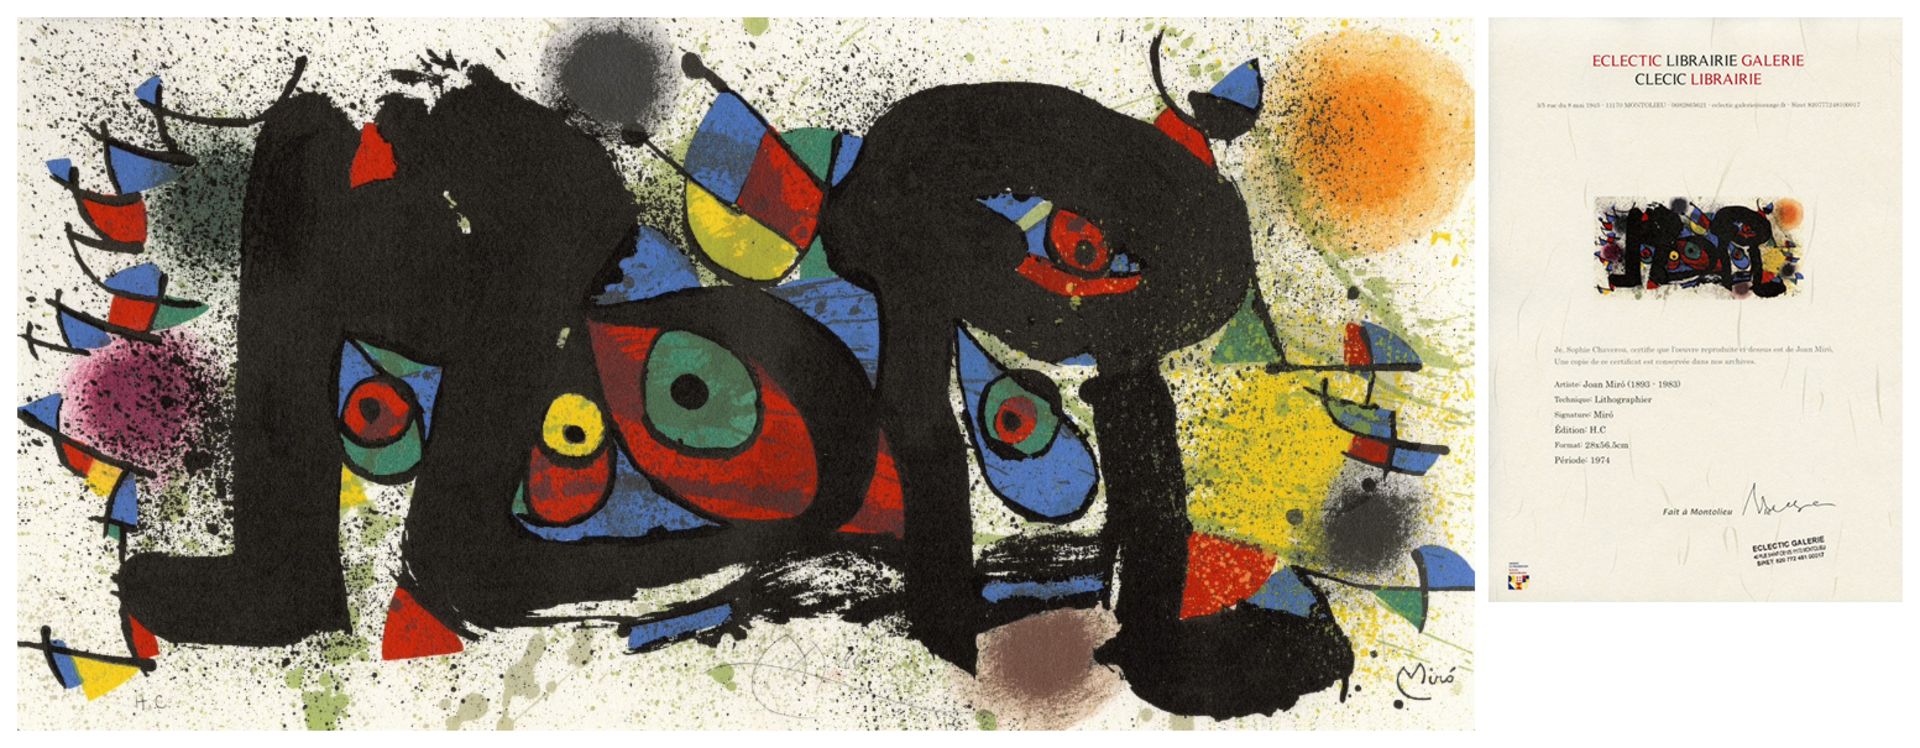 Joan Miro (1893-1983), Lithograph